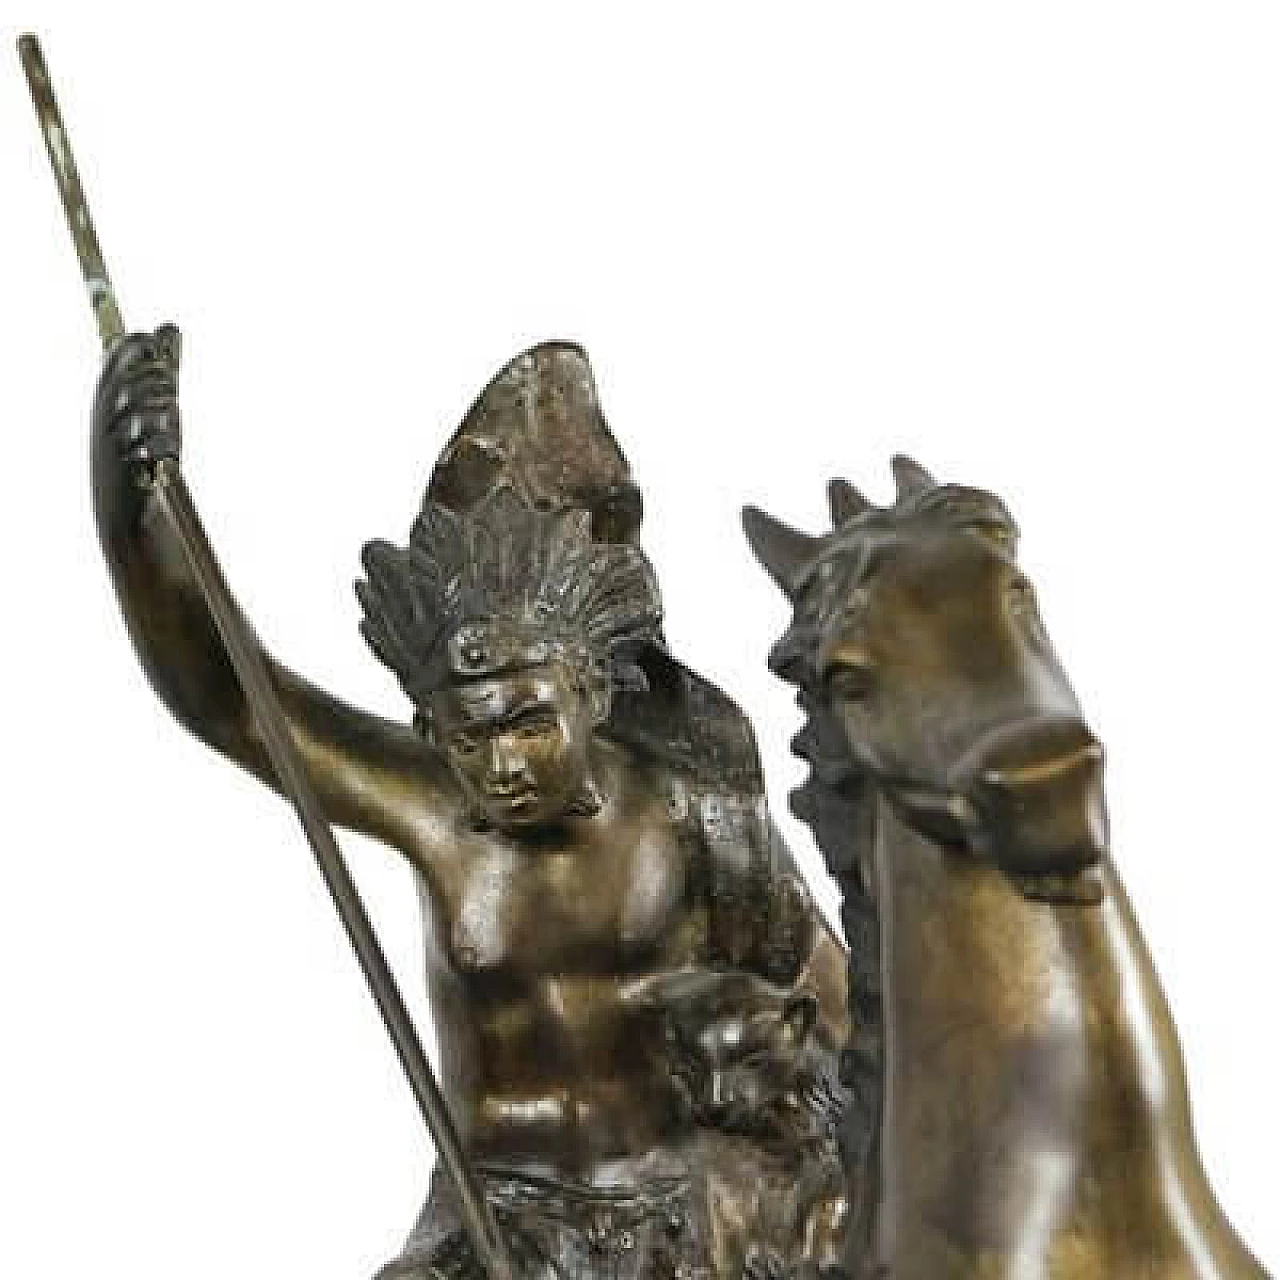 Indian warrior on horseback, reproduction after Tommaso Campajola, bronze sculpture 14